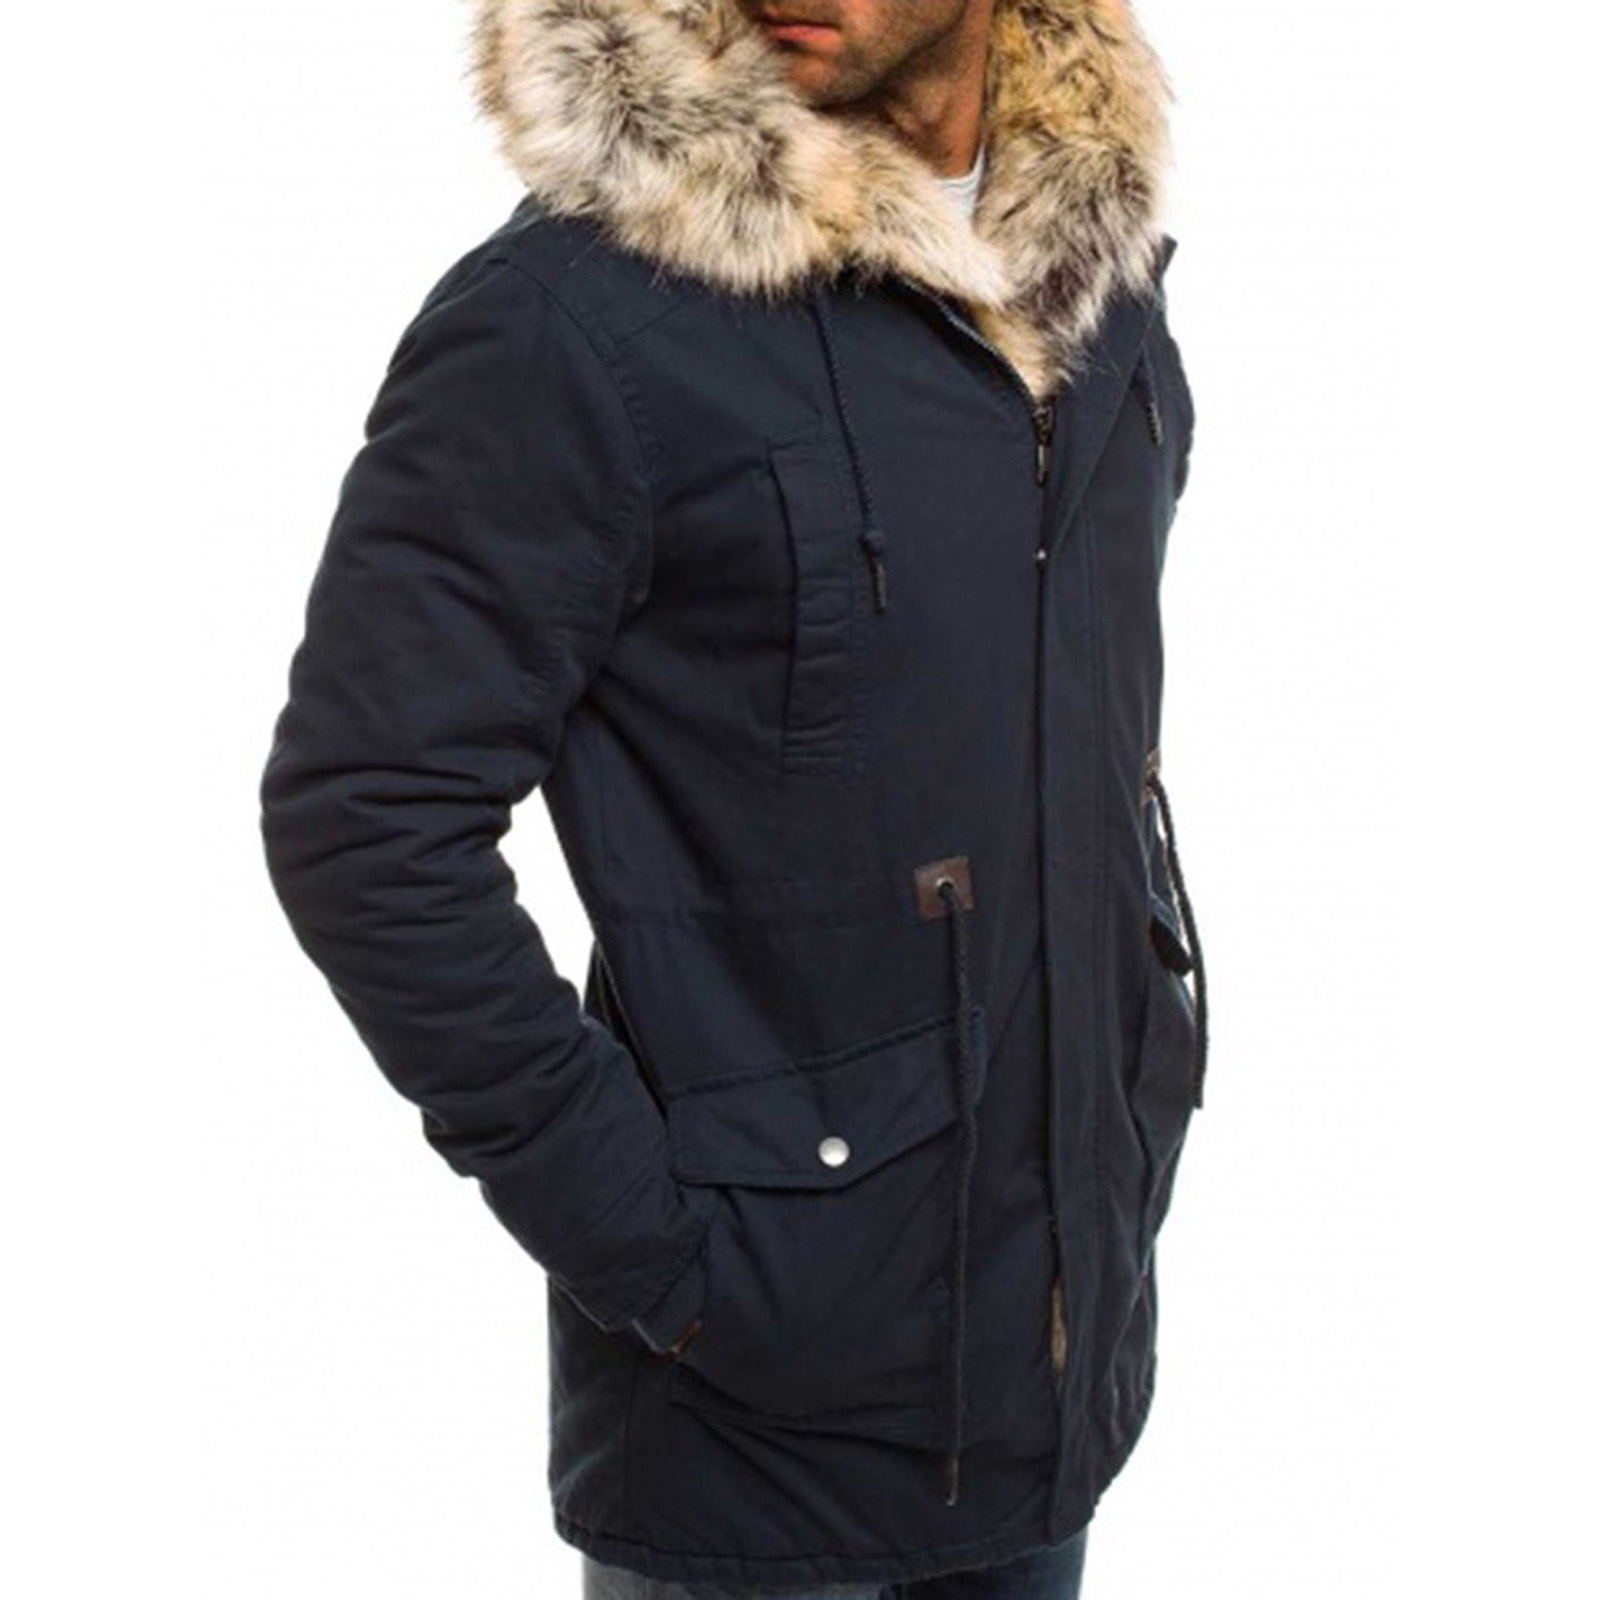 Резервед куртка мужская зимняя